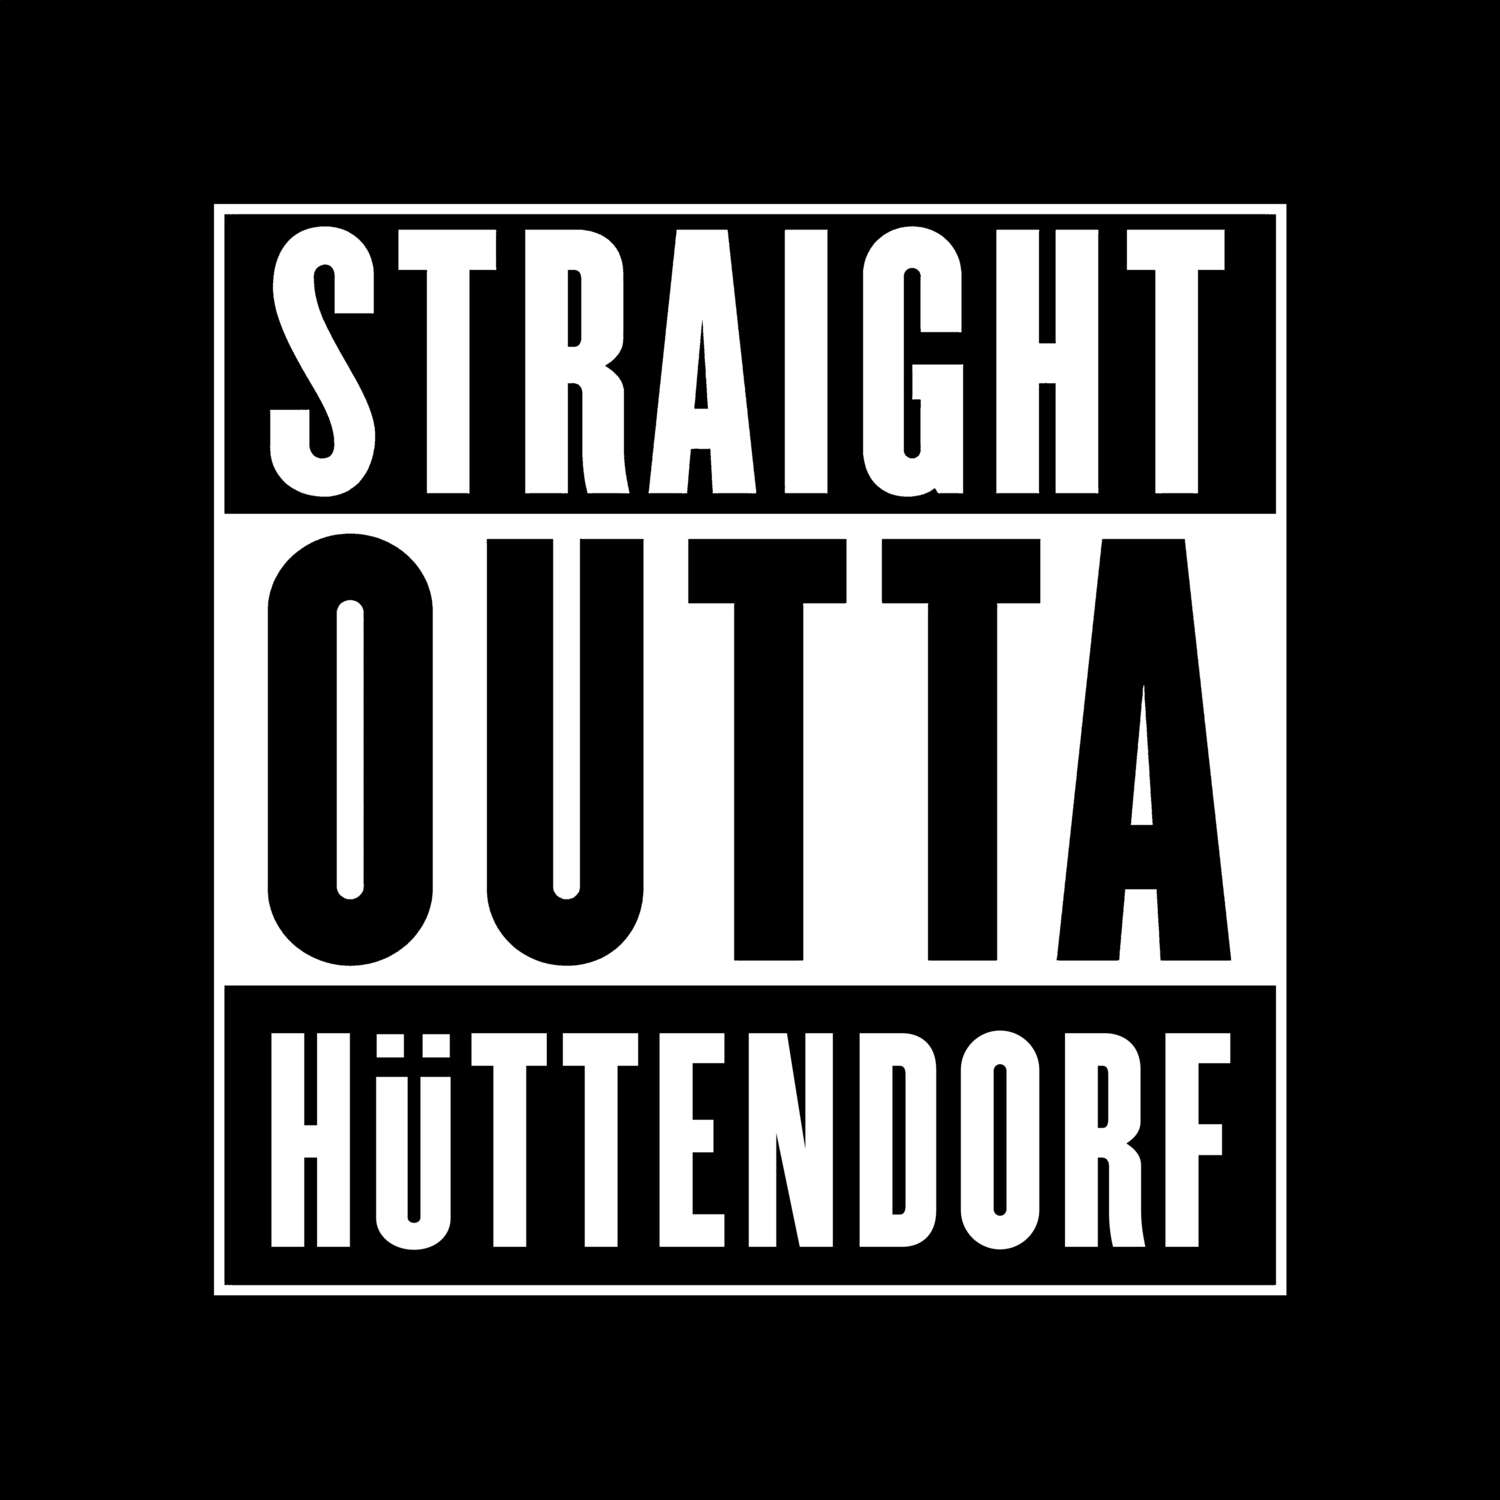 Hüttendorf T-Shirt »Straight Outta«